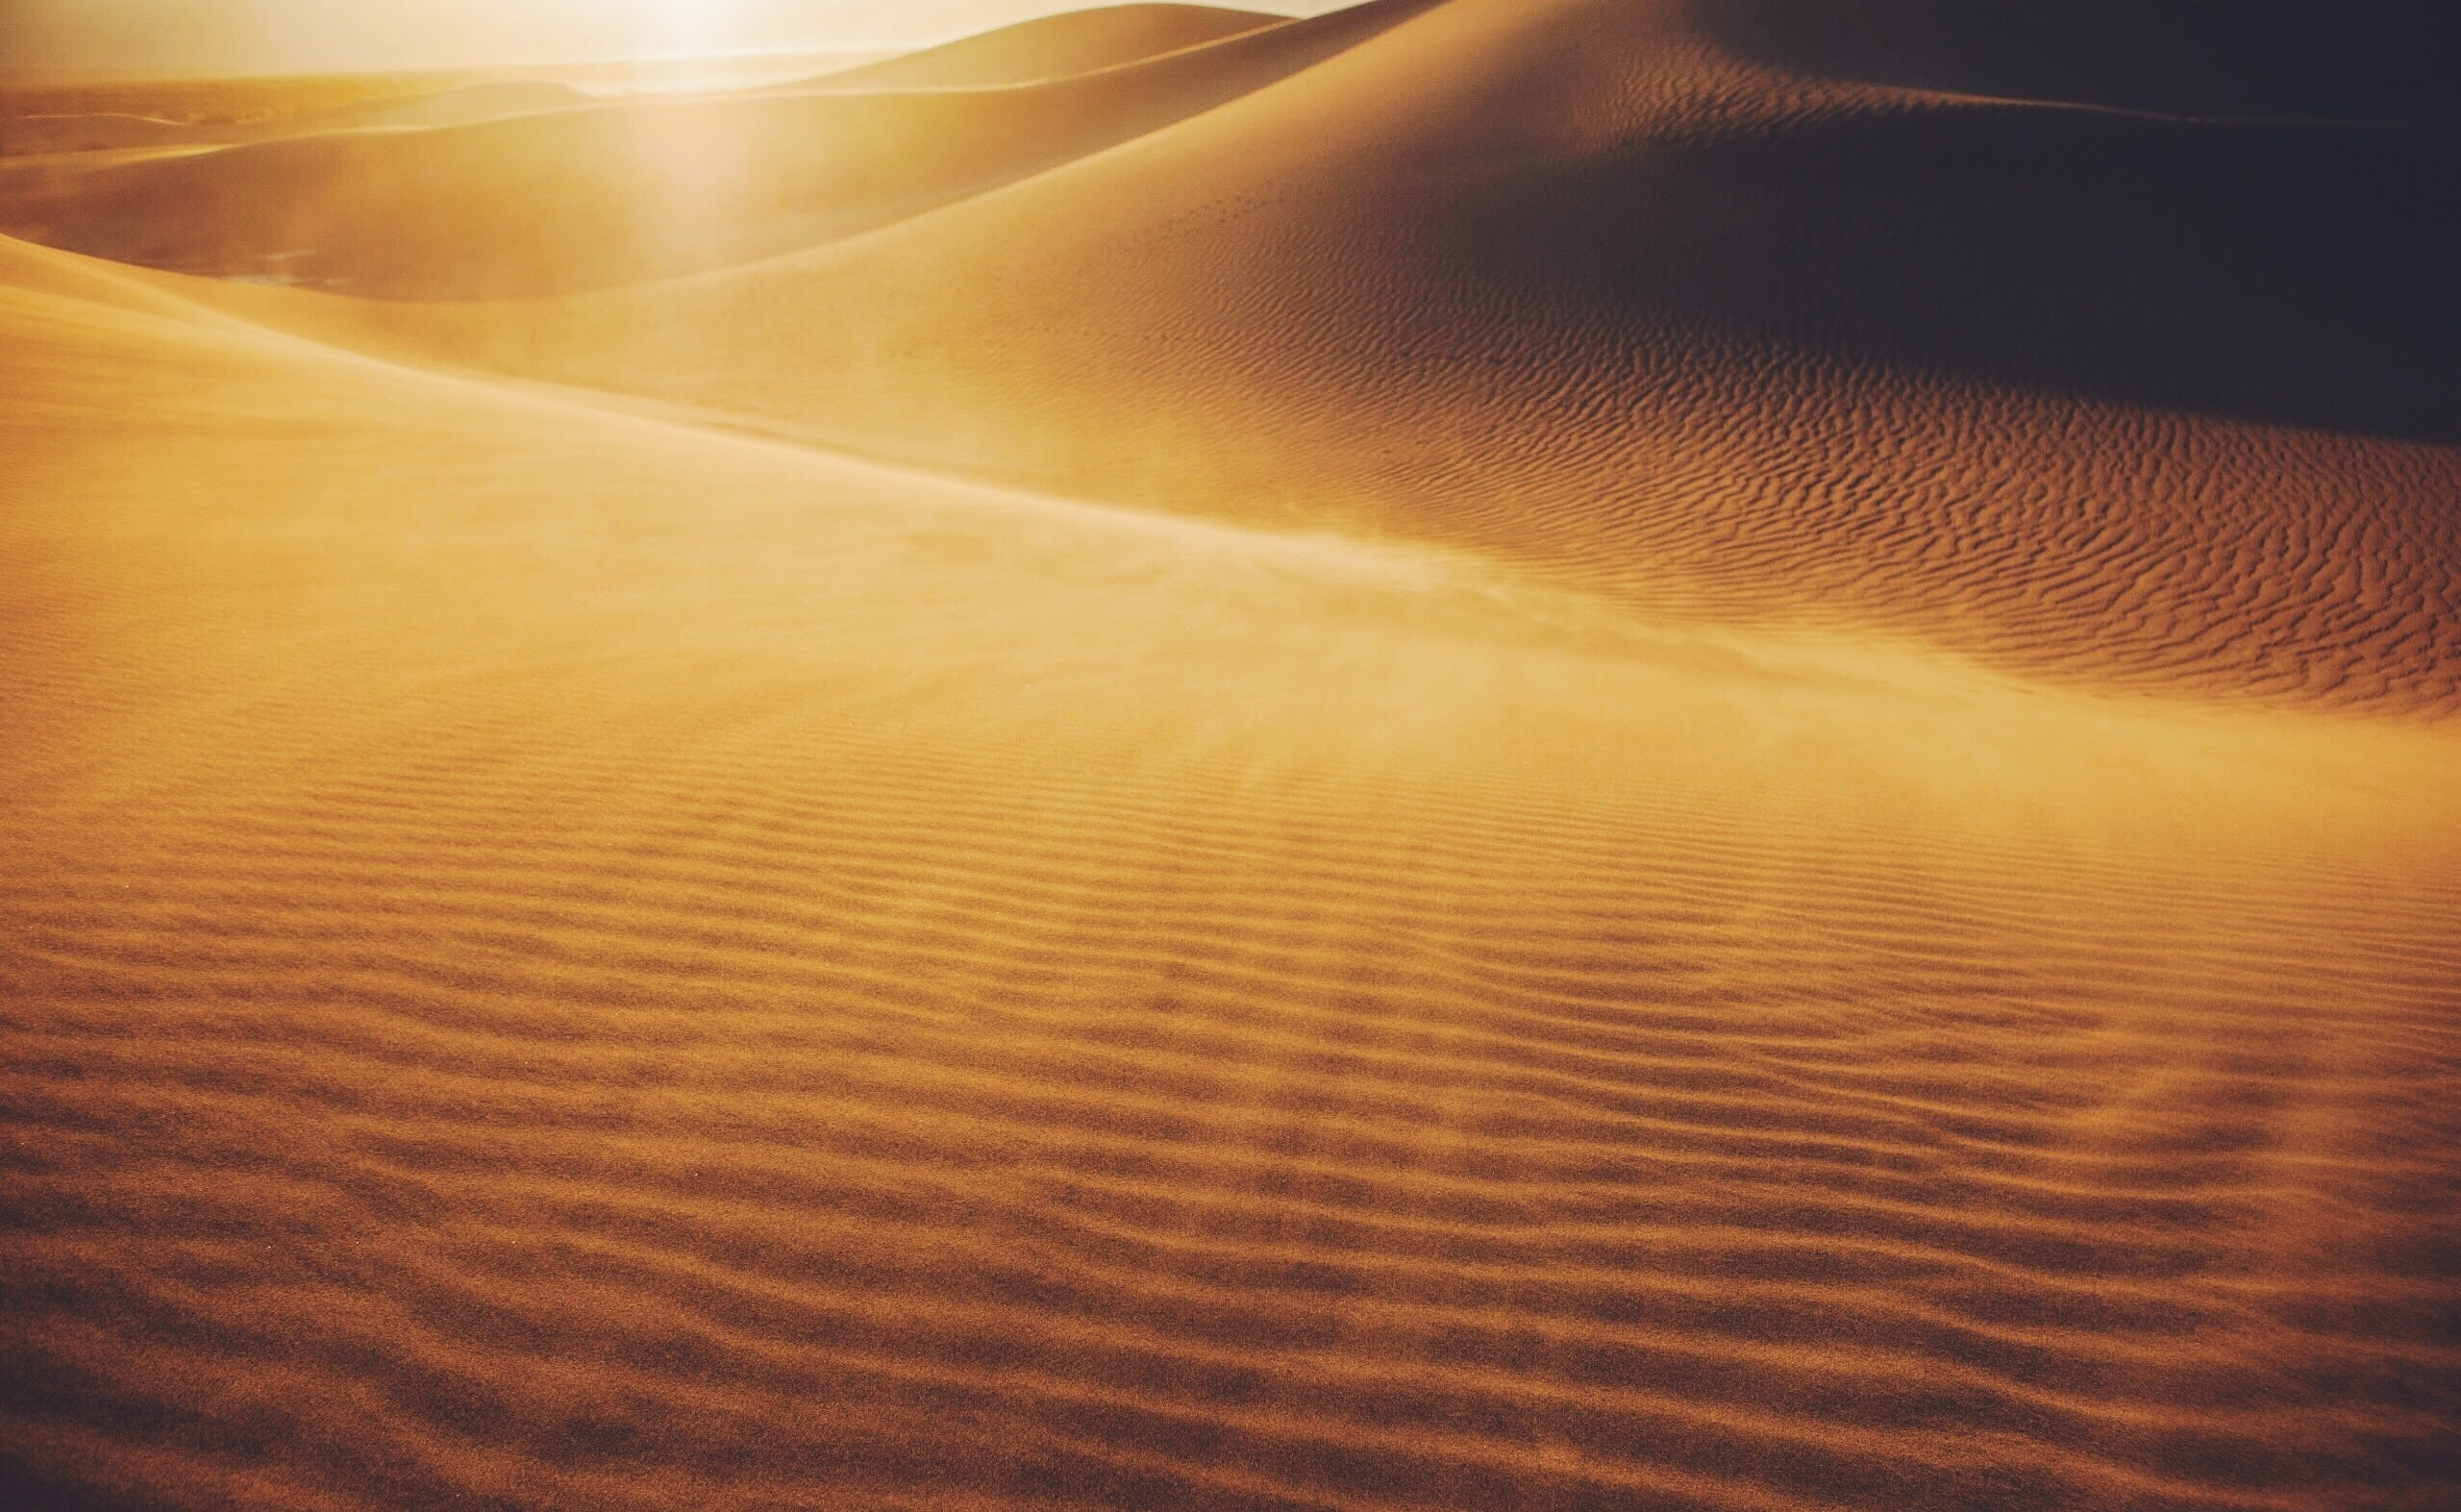 Mesquite Flat Sand Dunes, Death Valley..., Nature, Desert, California